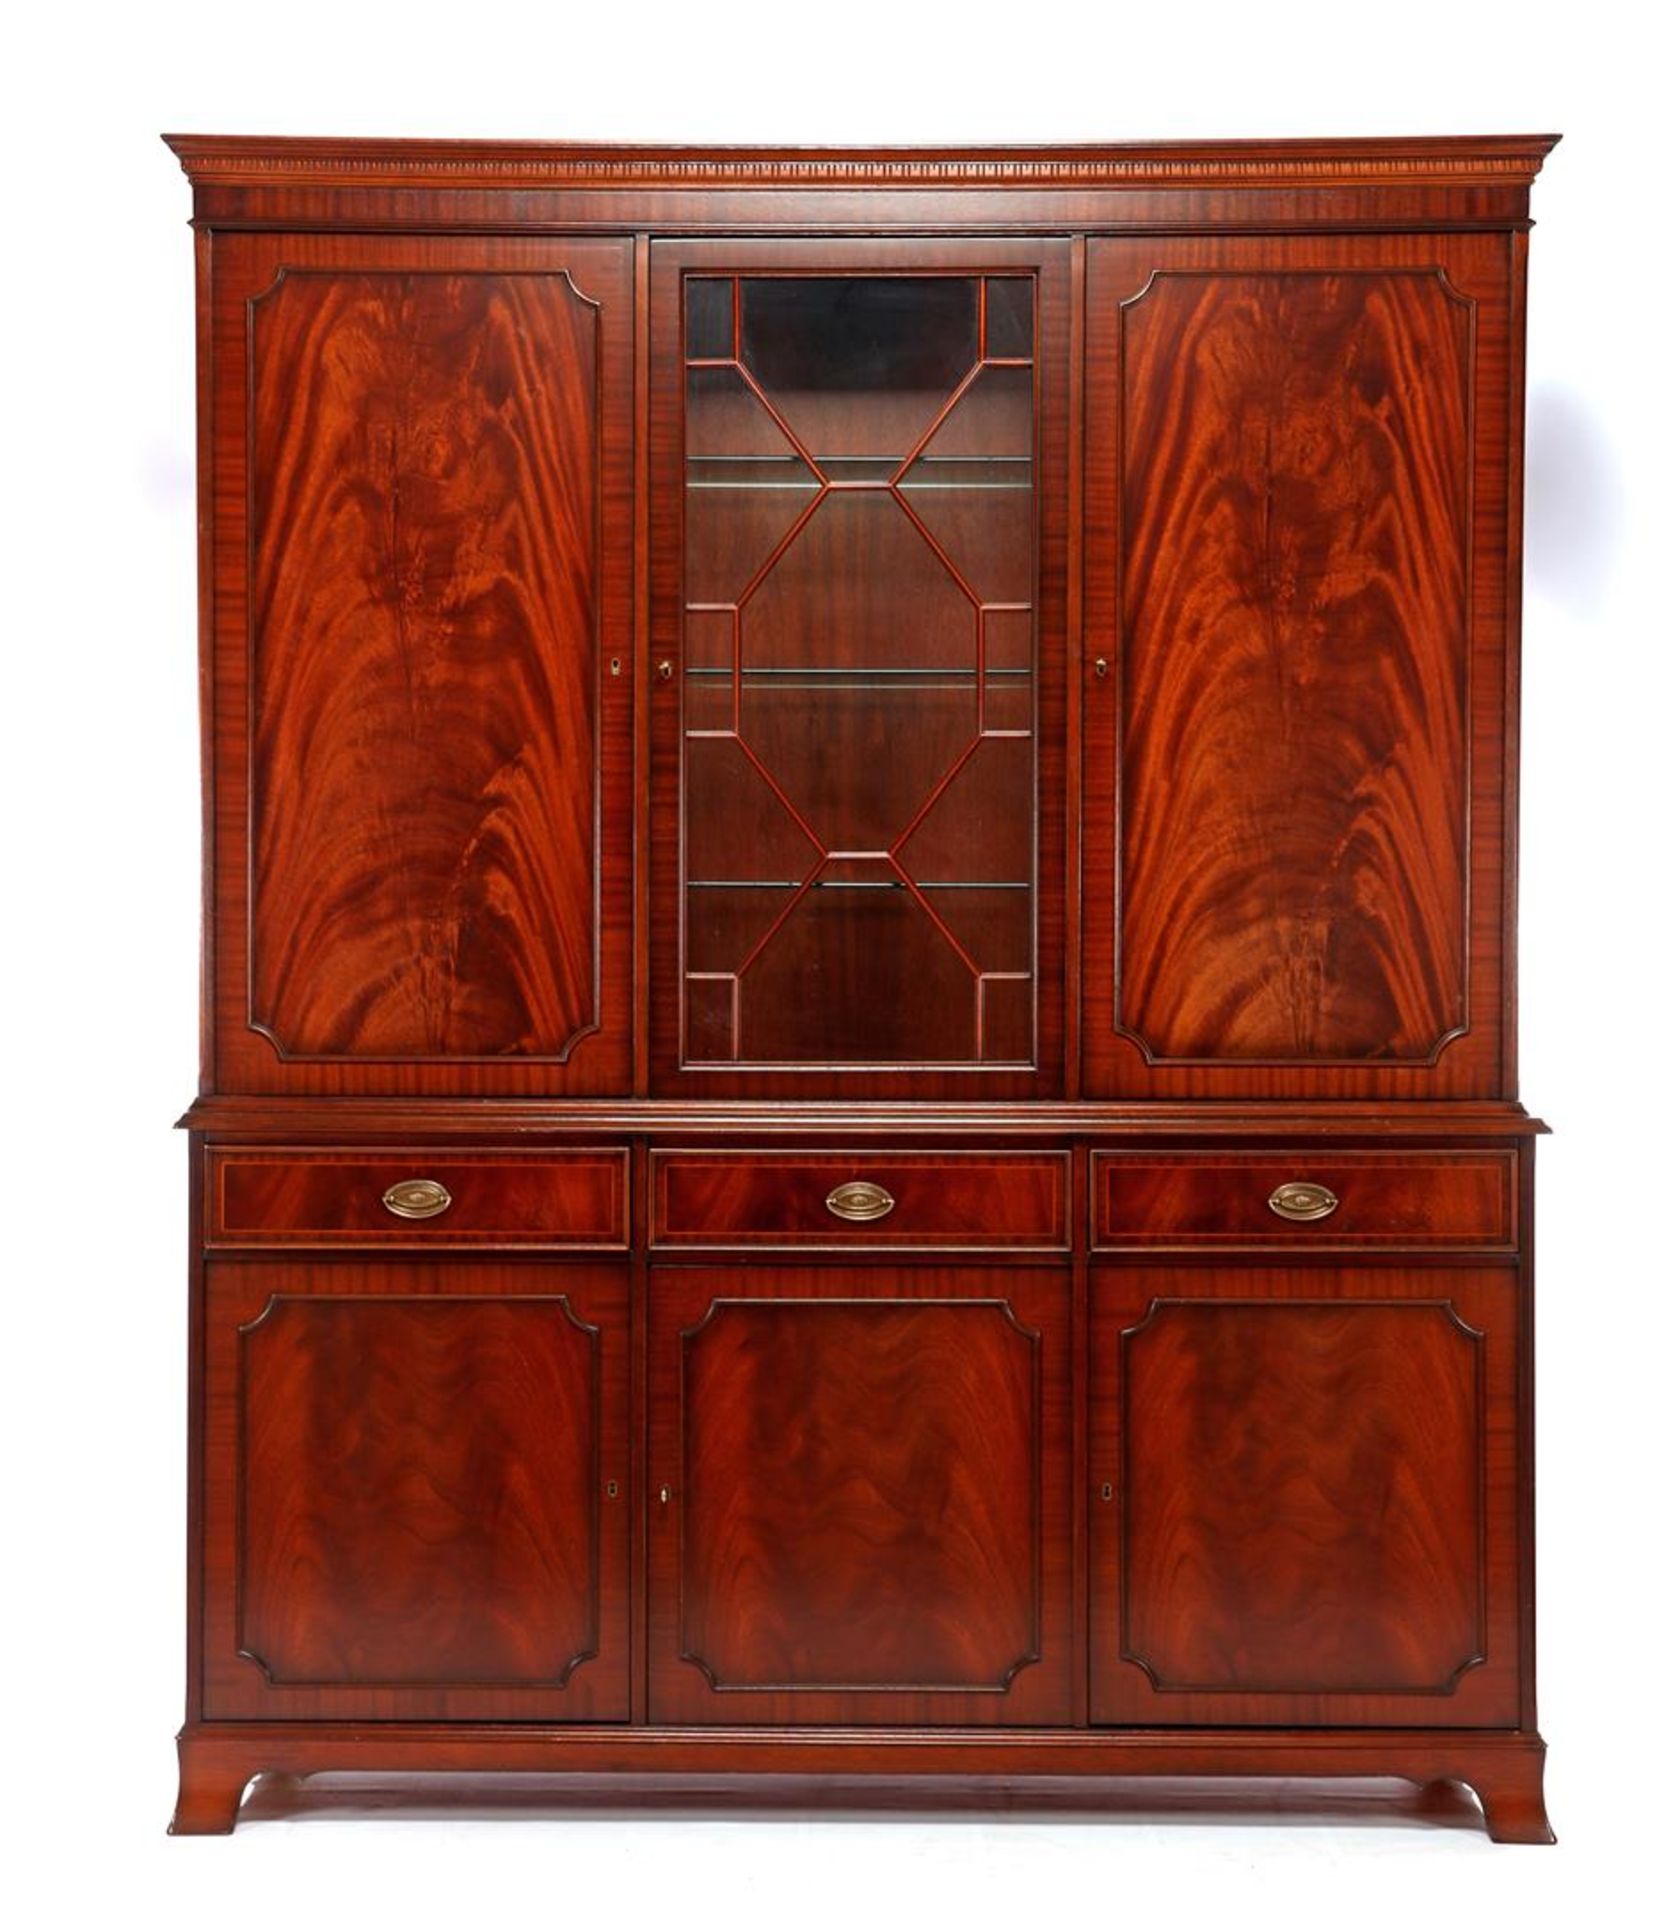 Heldense mahogany 2-part cabinet with 3-door base cabinet and 3-door top cabinet with 1 glazed